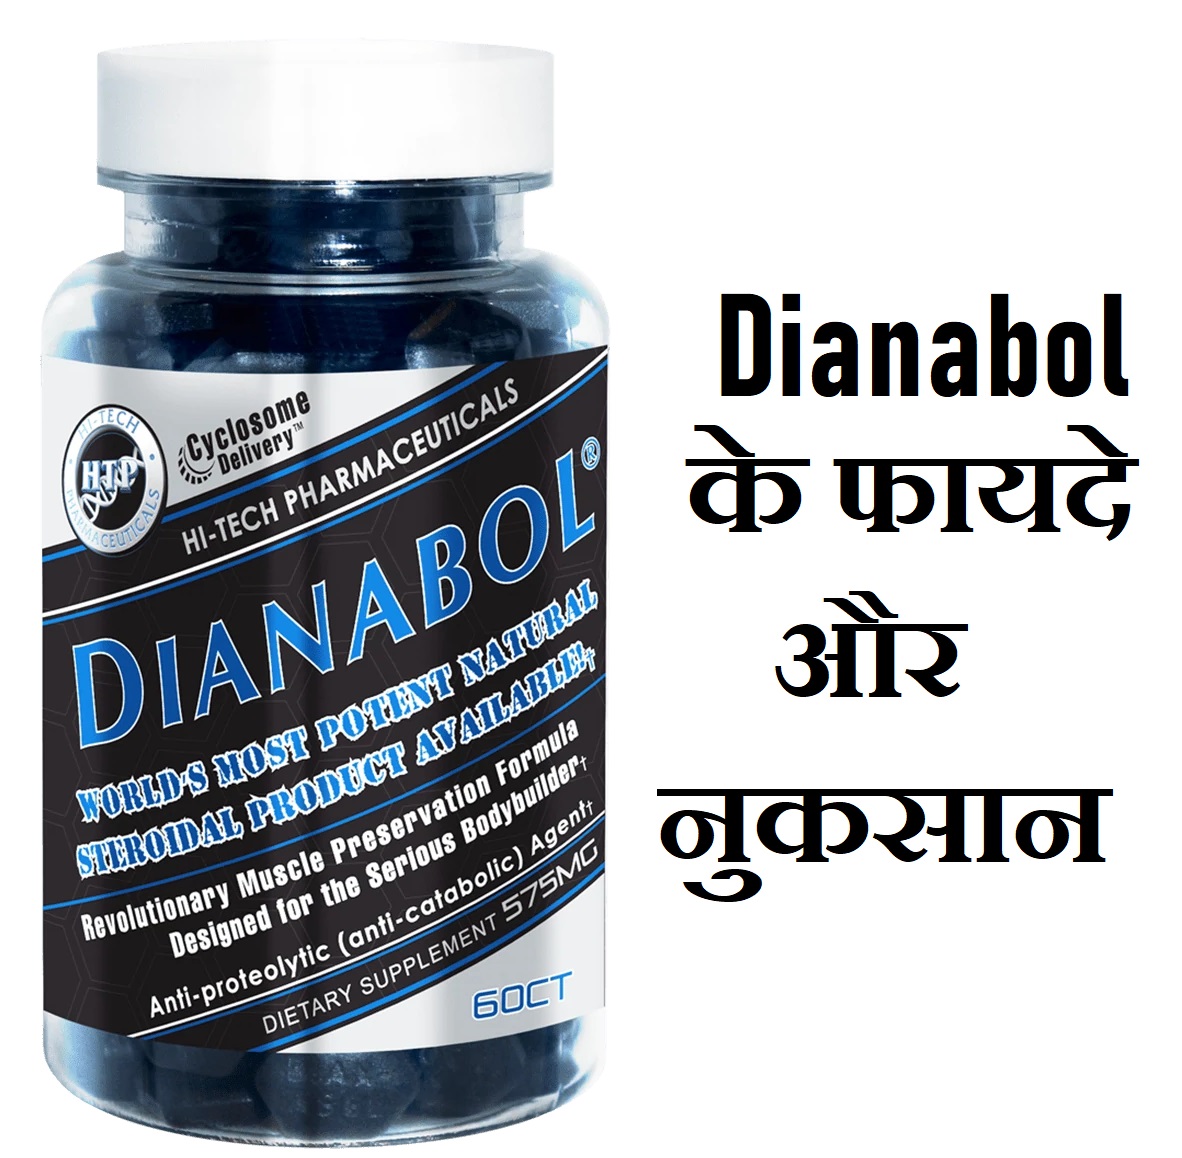 Dianabol के फायदे और नुकसान,Dianabol Benefits Side Effects in Hindi,Dianabol ke fayde,Dianabol ke nuksan,Dianabol ke benefit,Dianabol harm 